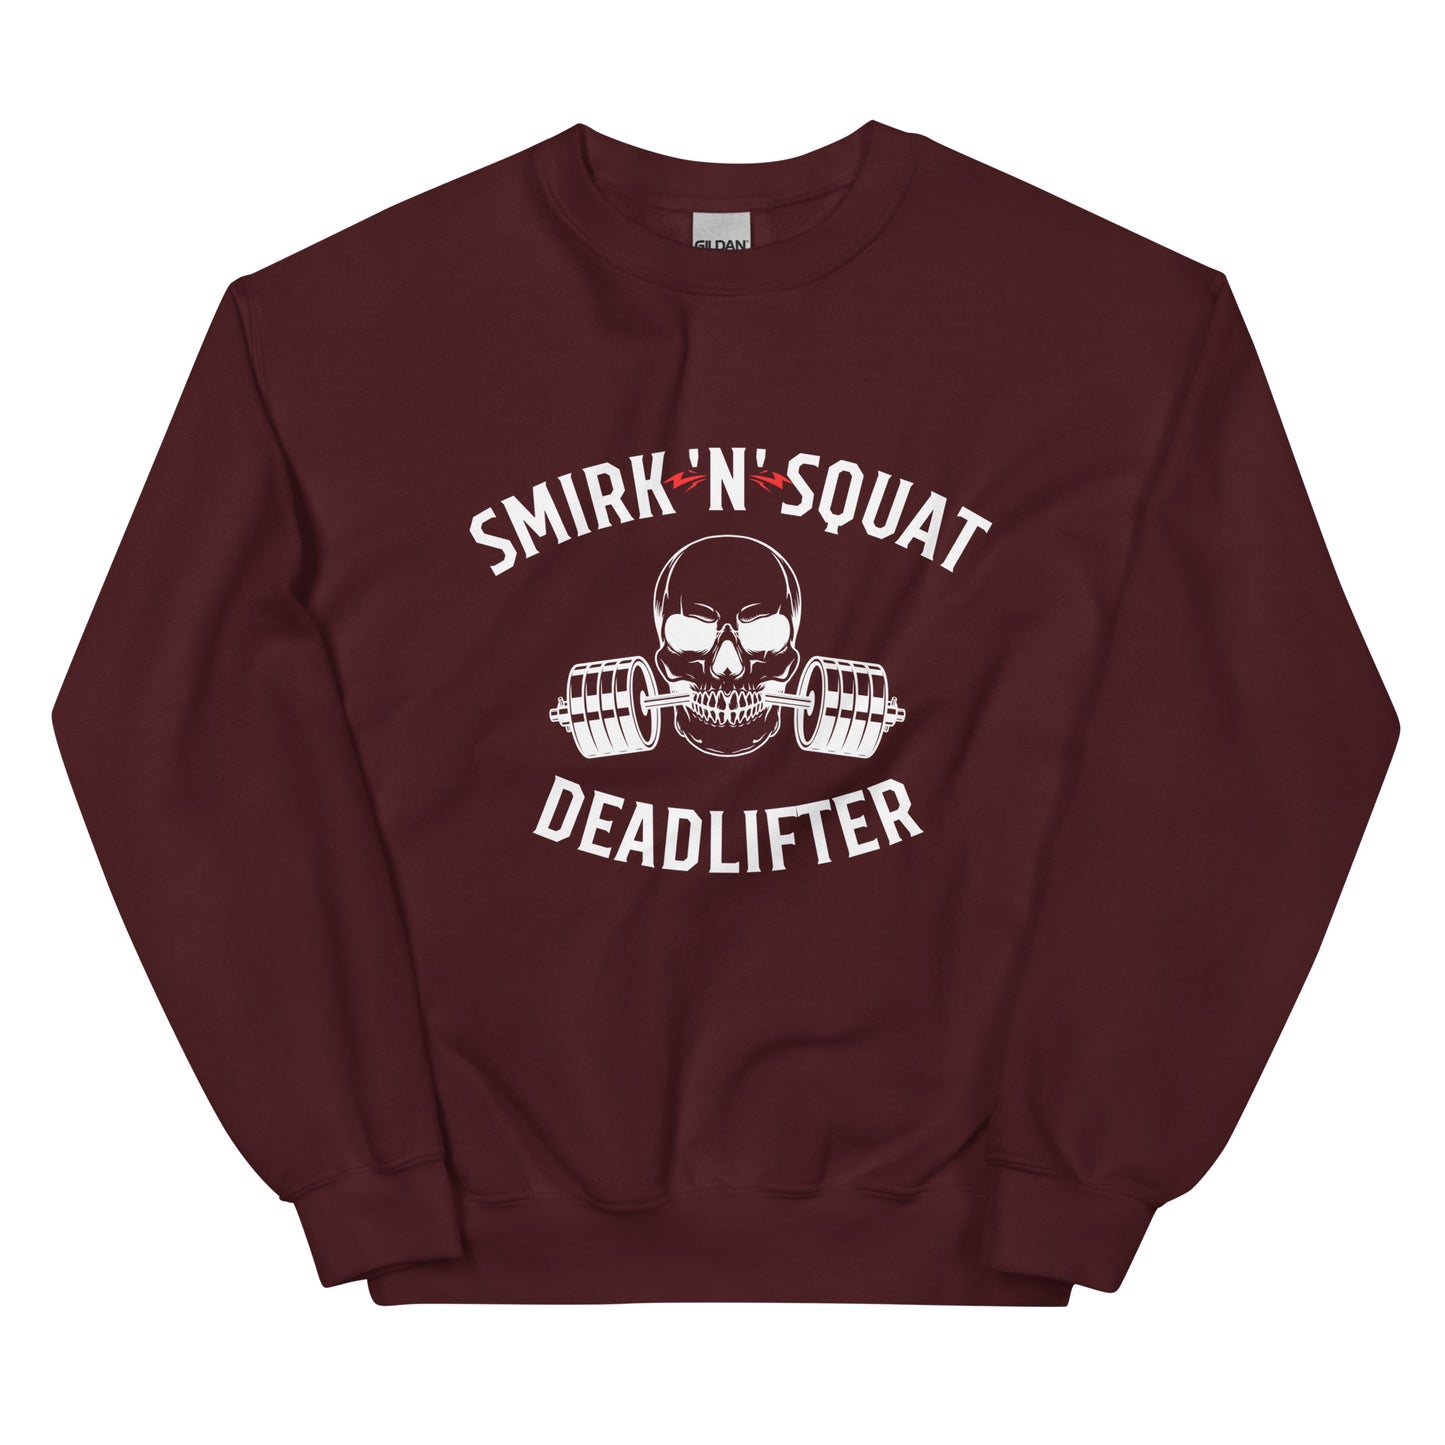 SMIRK 'N' SQUAT - Sweat-shirt unisexe